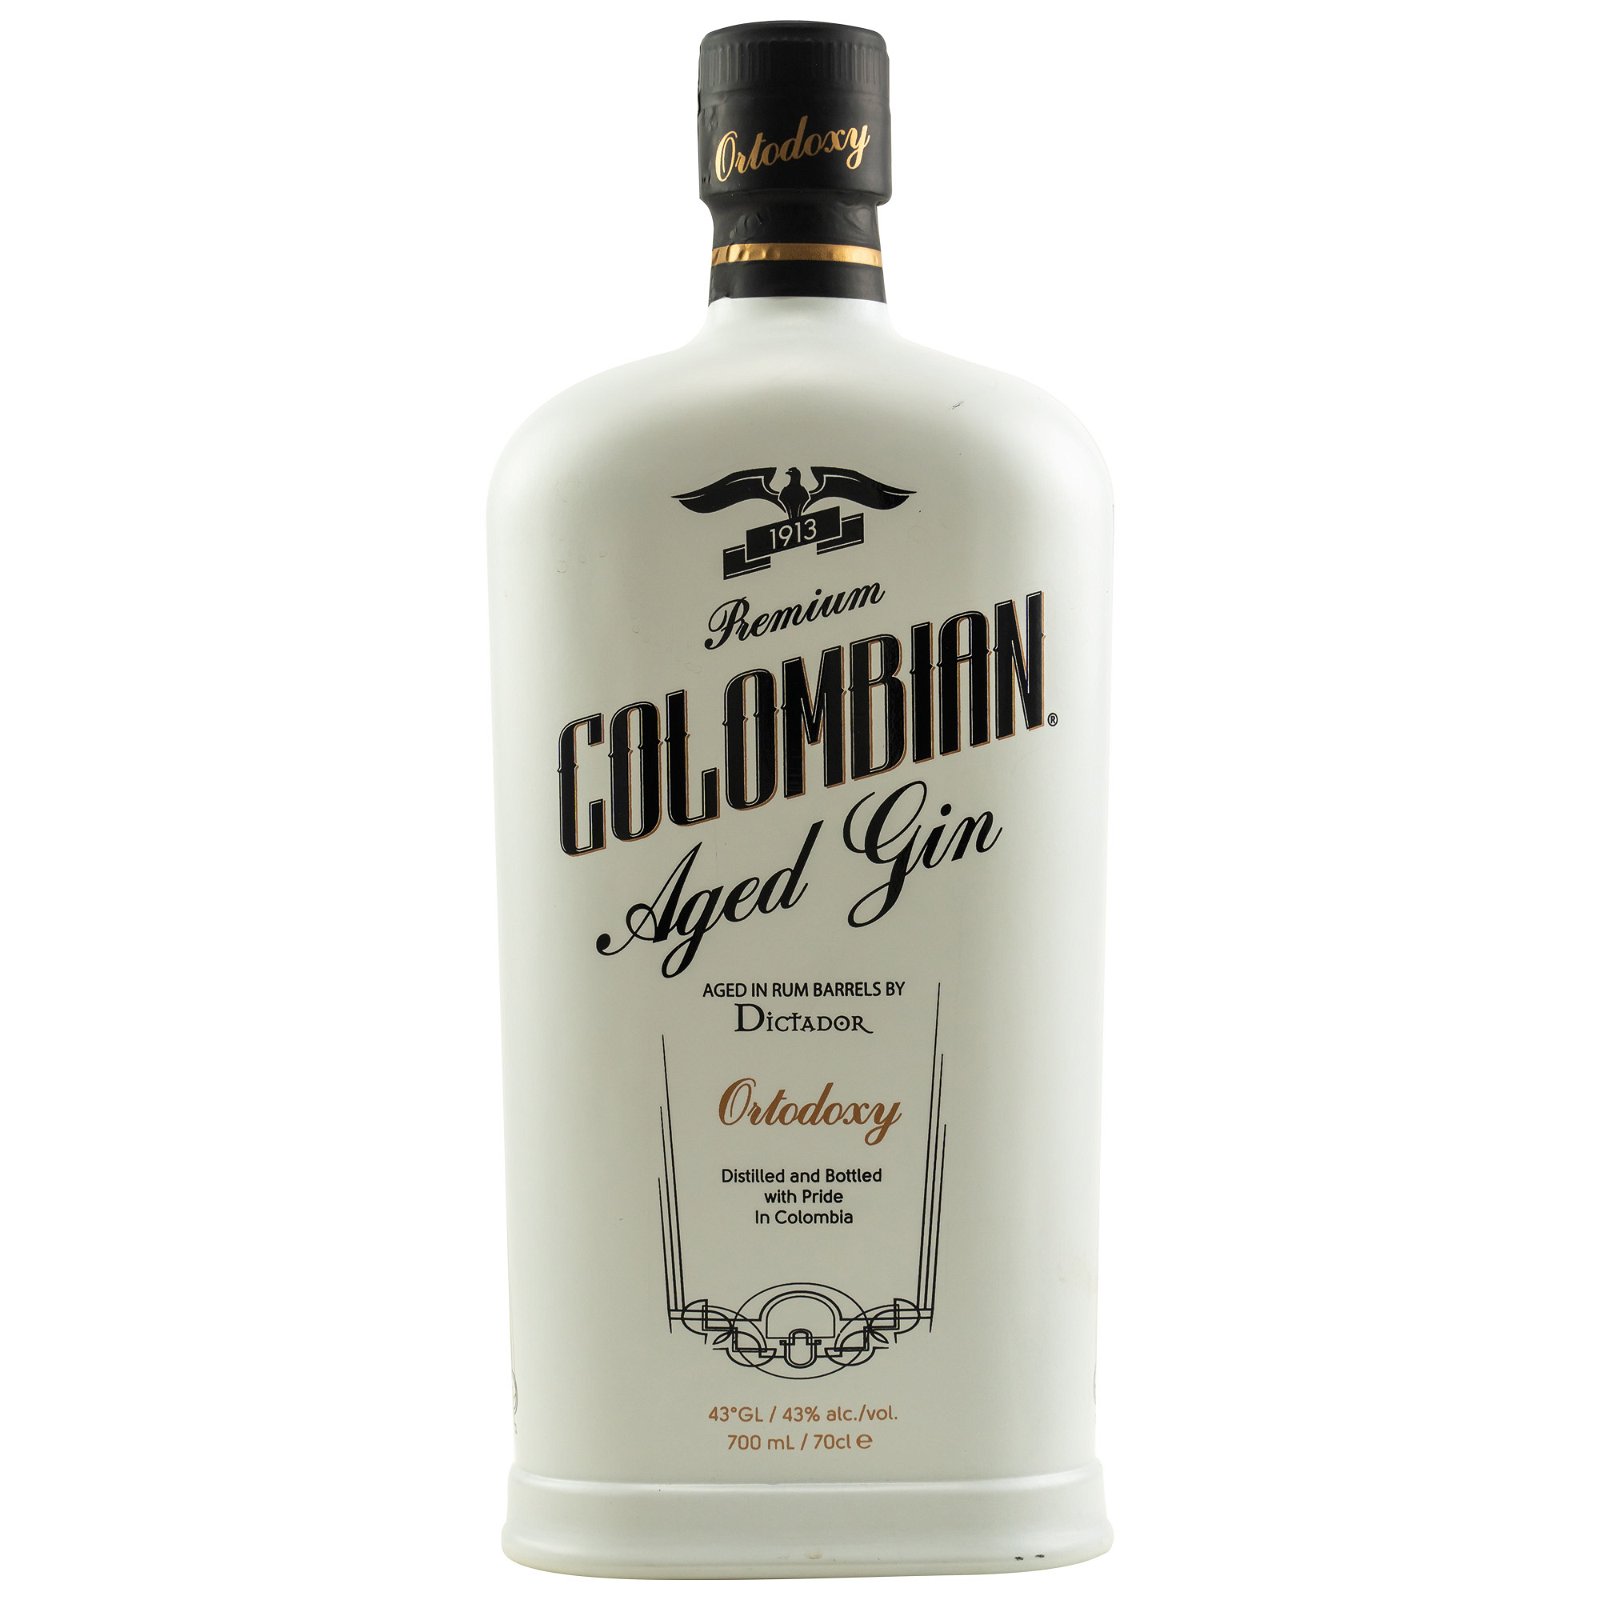 Dictador Ortodoxy Premium Colombian Aged Gin